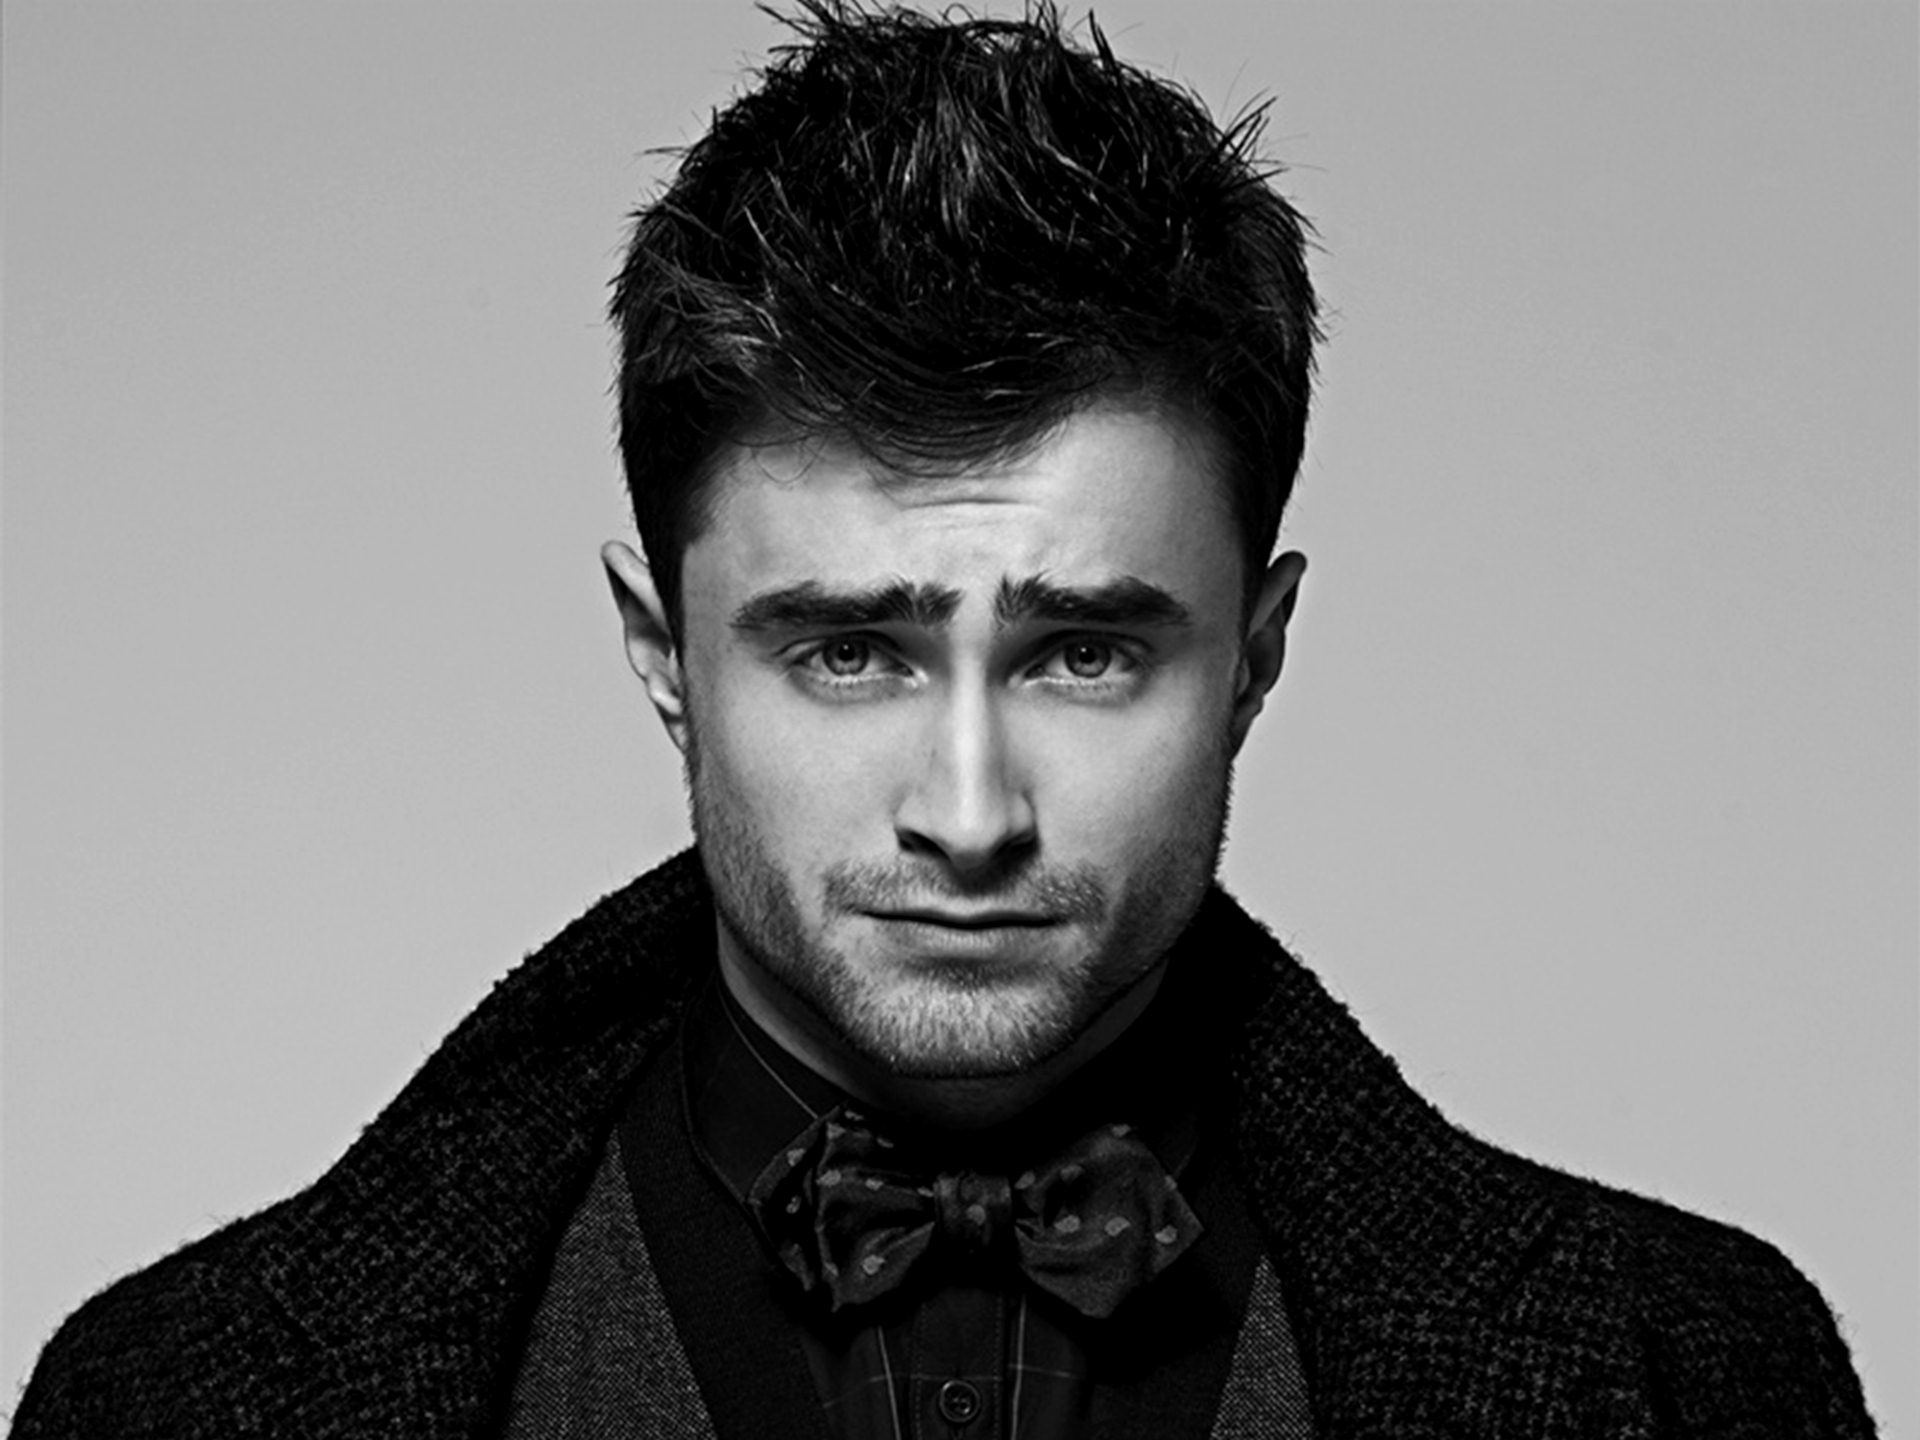  Daniel Radcliffe no rechaza volver a ‘Harry Potter’